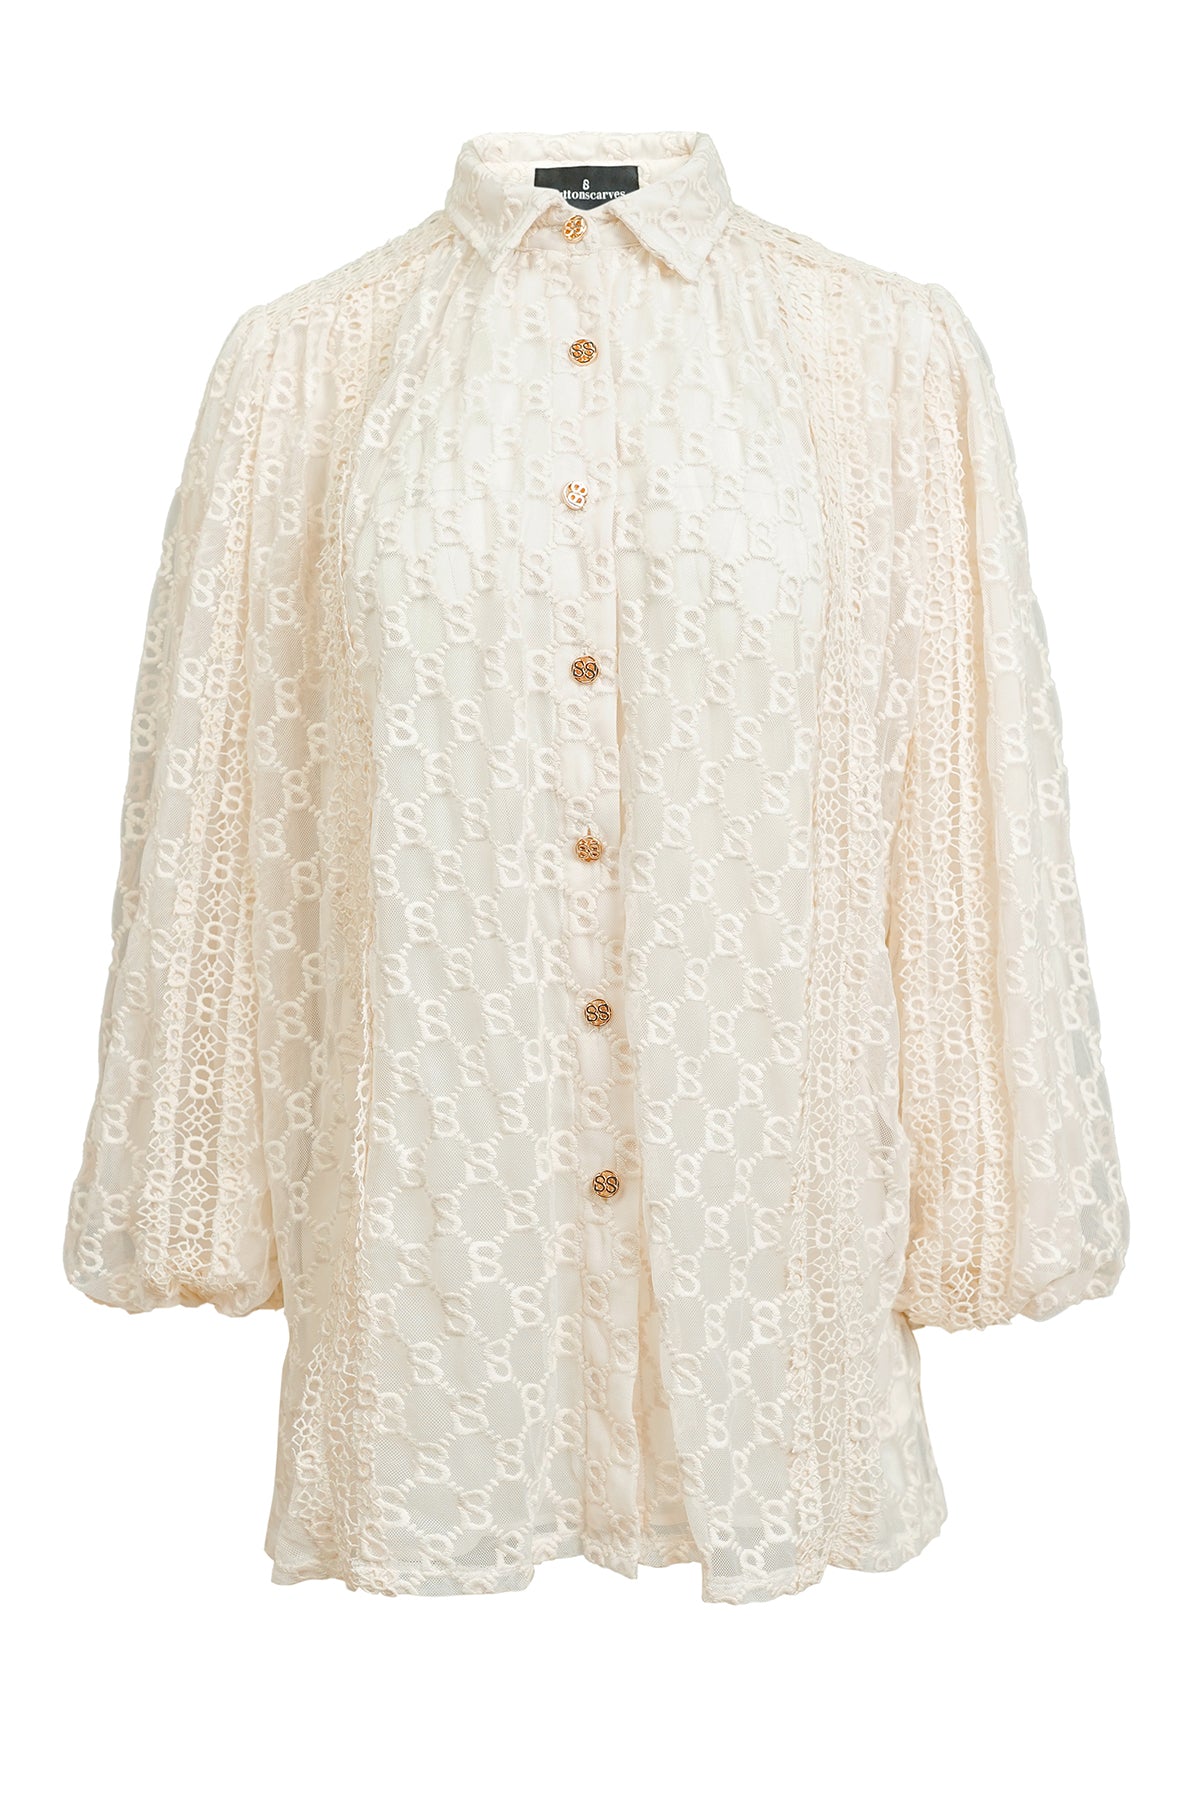 Monogram Lace Shirt  - Cream